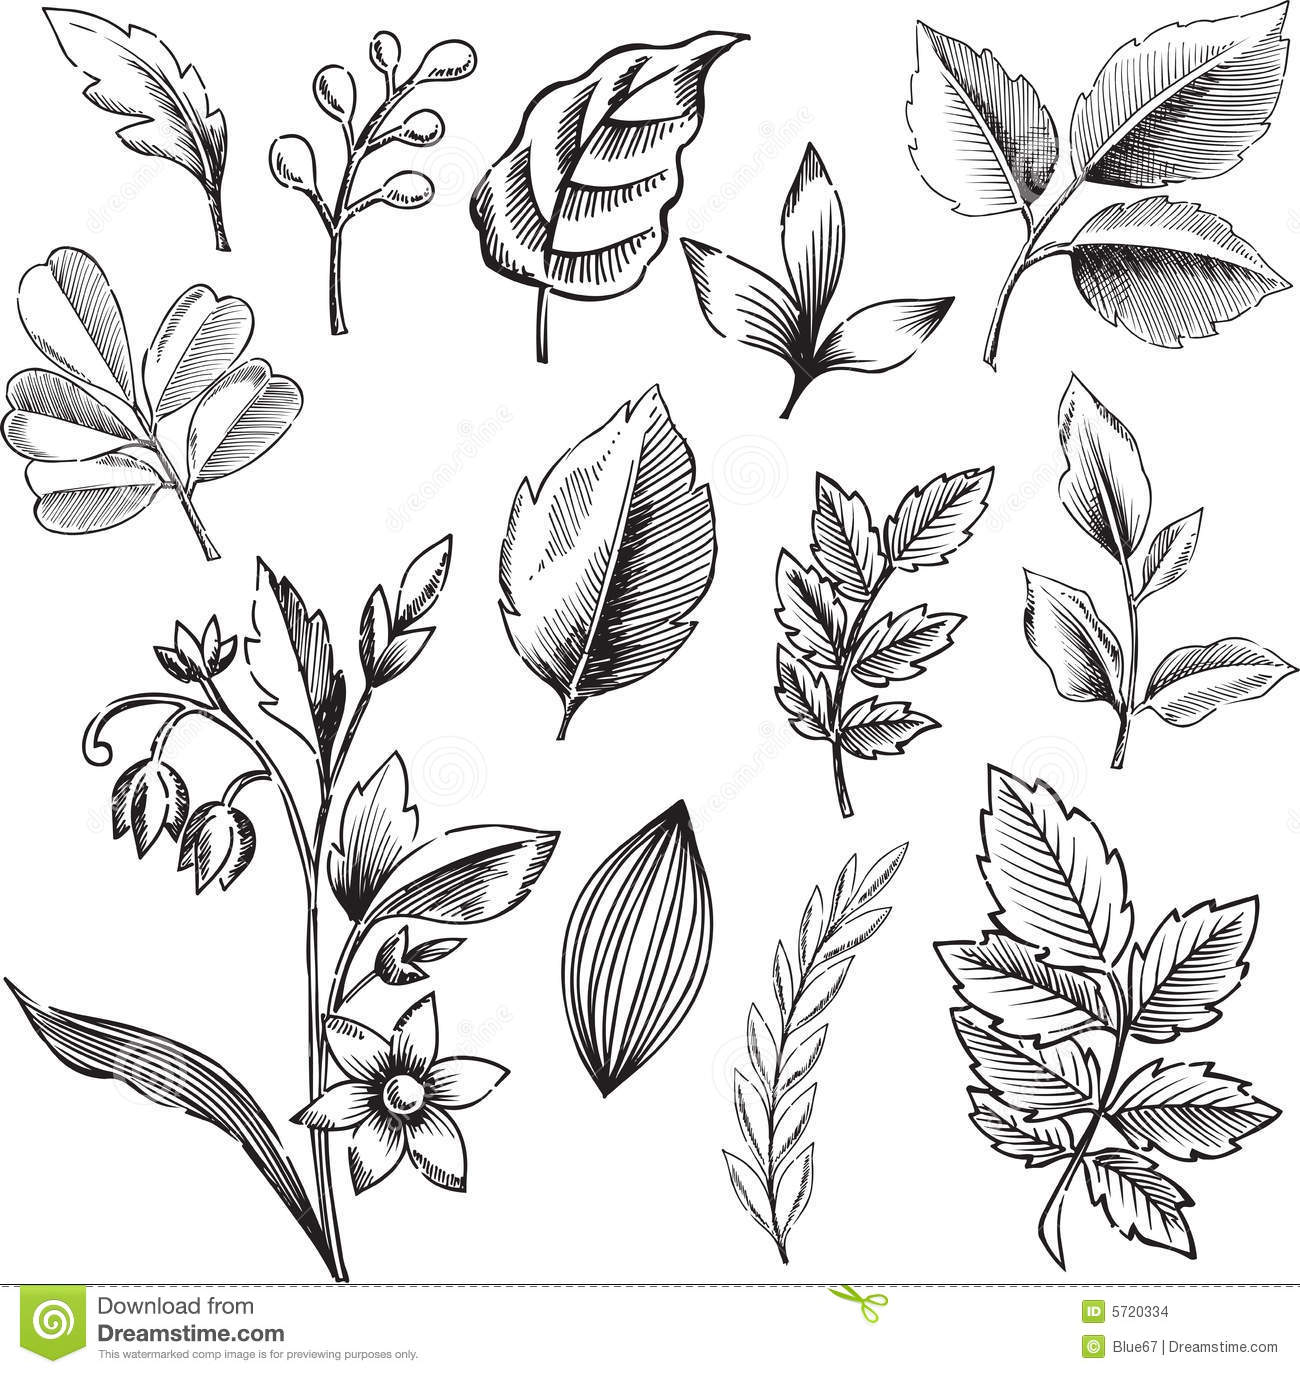 Black and White Leaf Illustrations